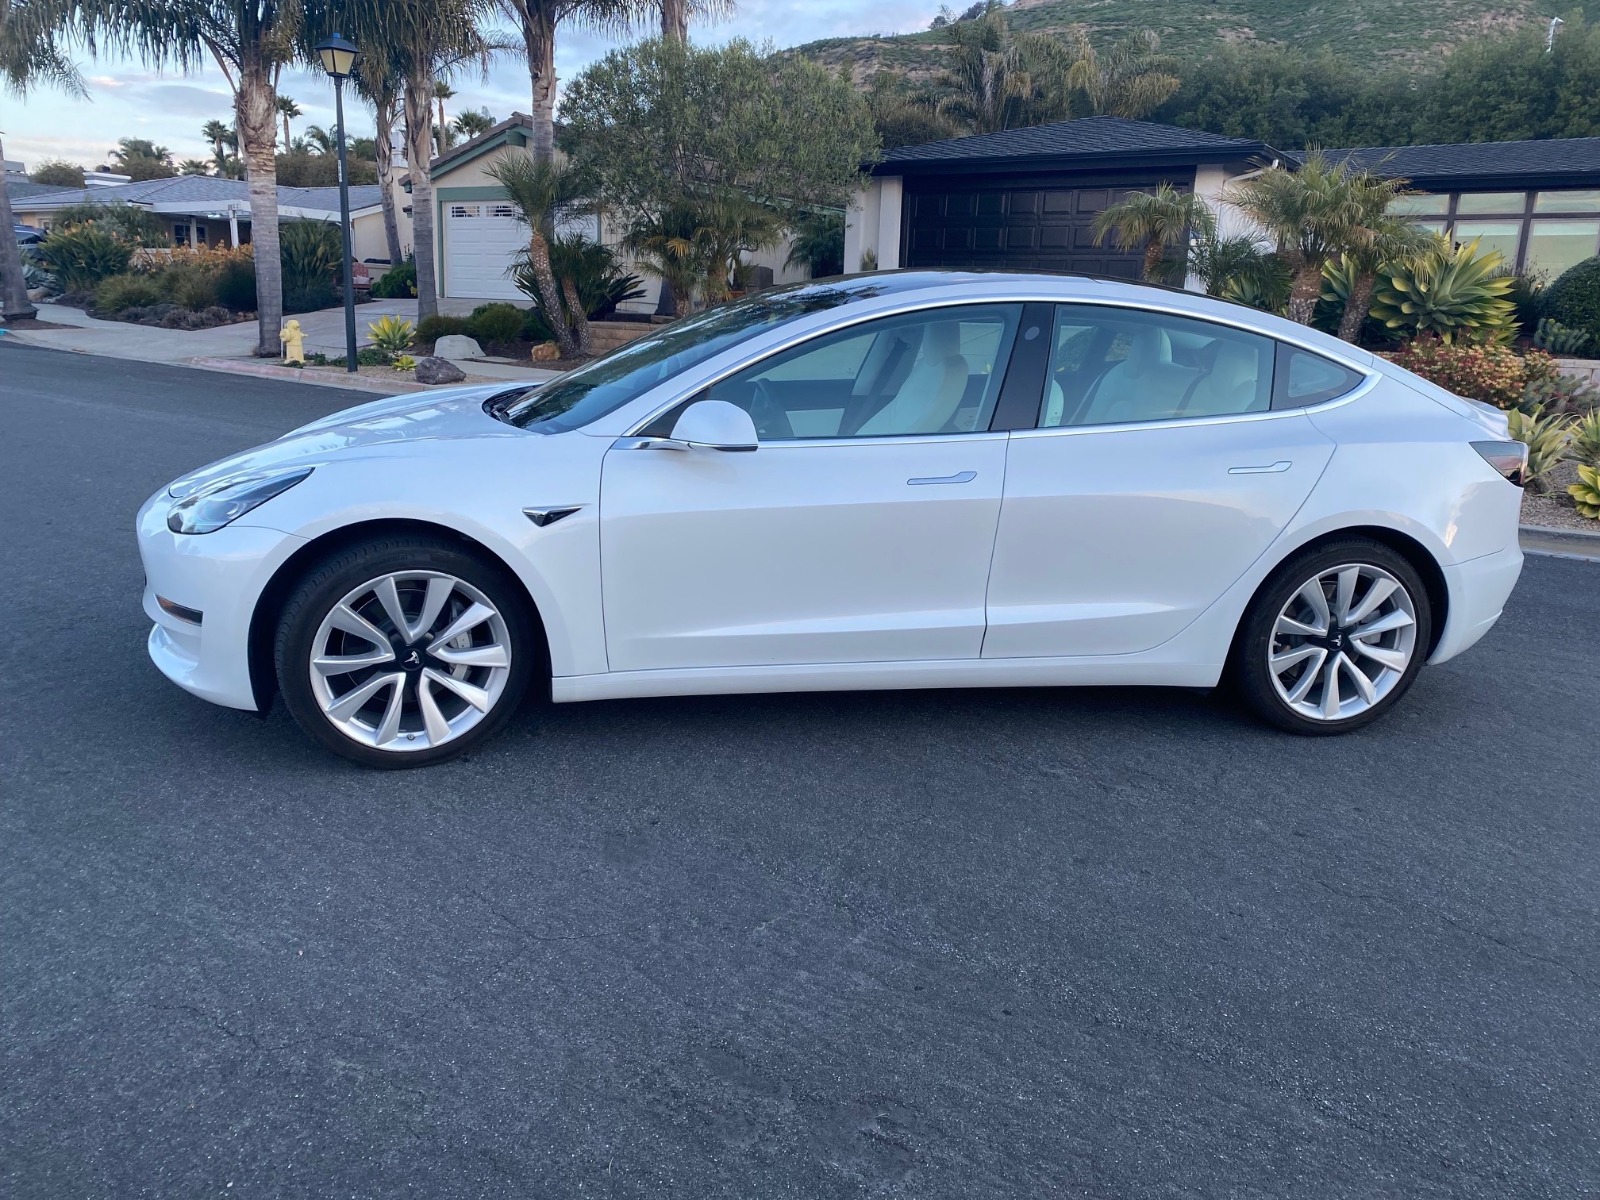 Tesla Model 3 Review, 2019 Standard Range Plus RWD